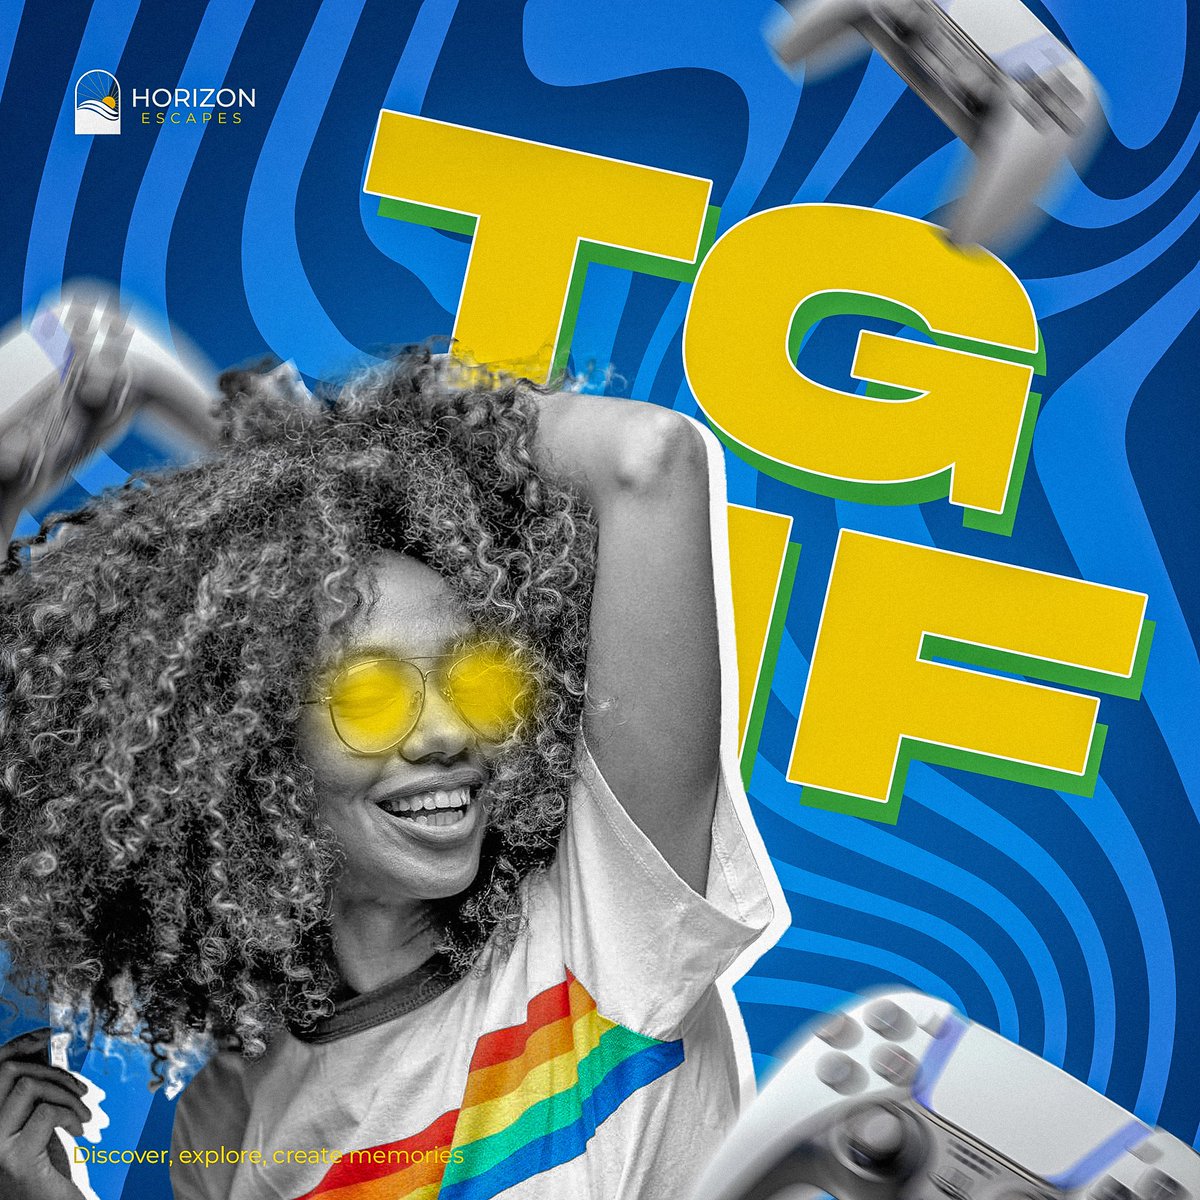 DAY 3: TGIF 

#30dayschallenge #GraphicDesign #TGIF